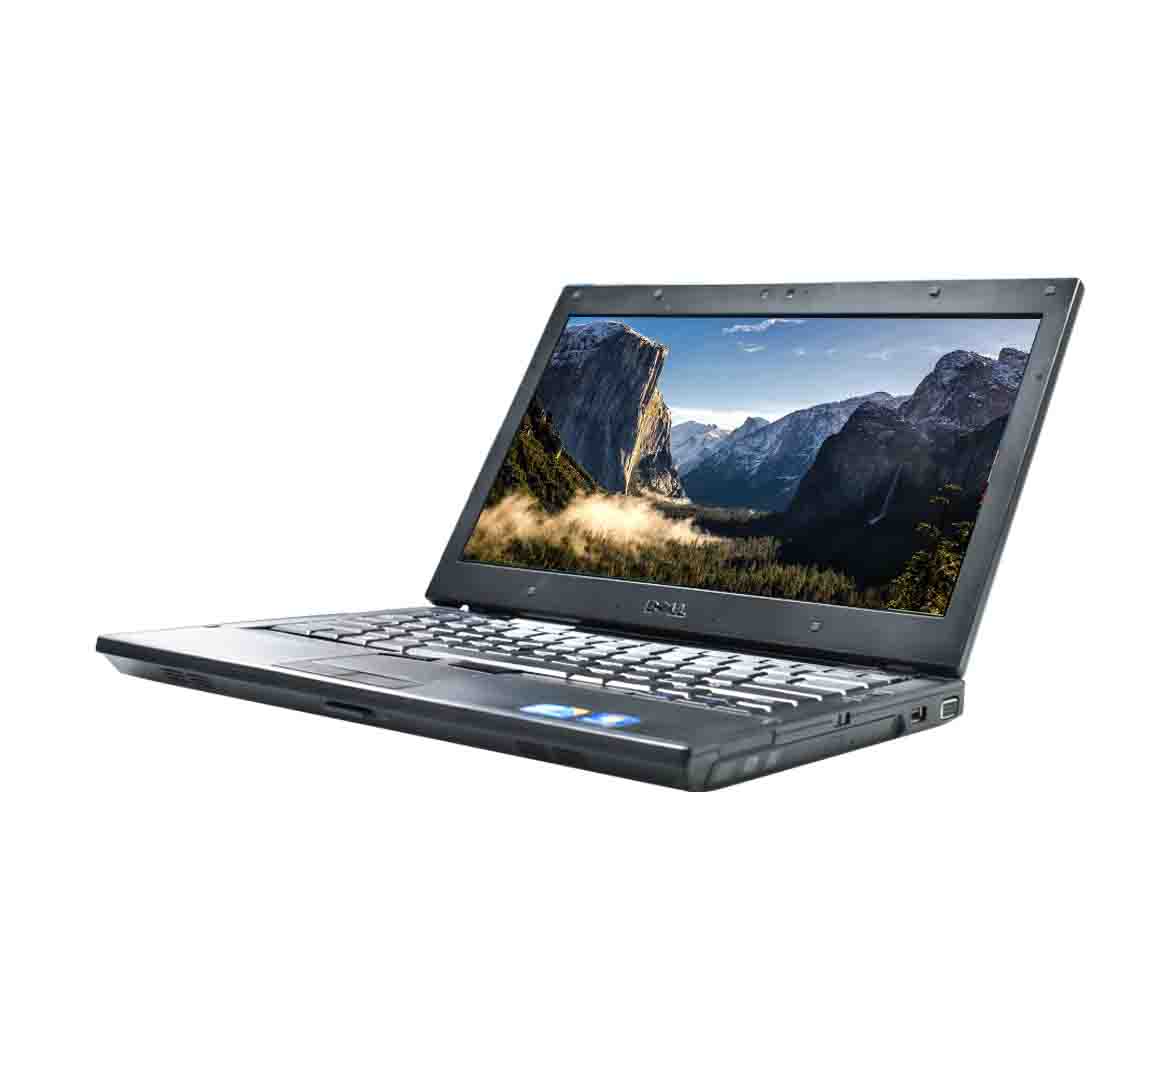 Dell Latitude E4310 Business Laptop, Intel Core i5-M Series CPU, 4GB RAM, 500GB HDD, 13.3 inch Display, Windows 10 Pro, Refurbished Laptop